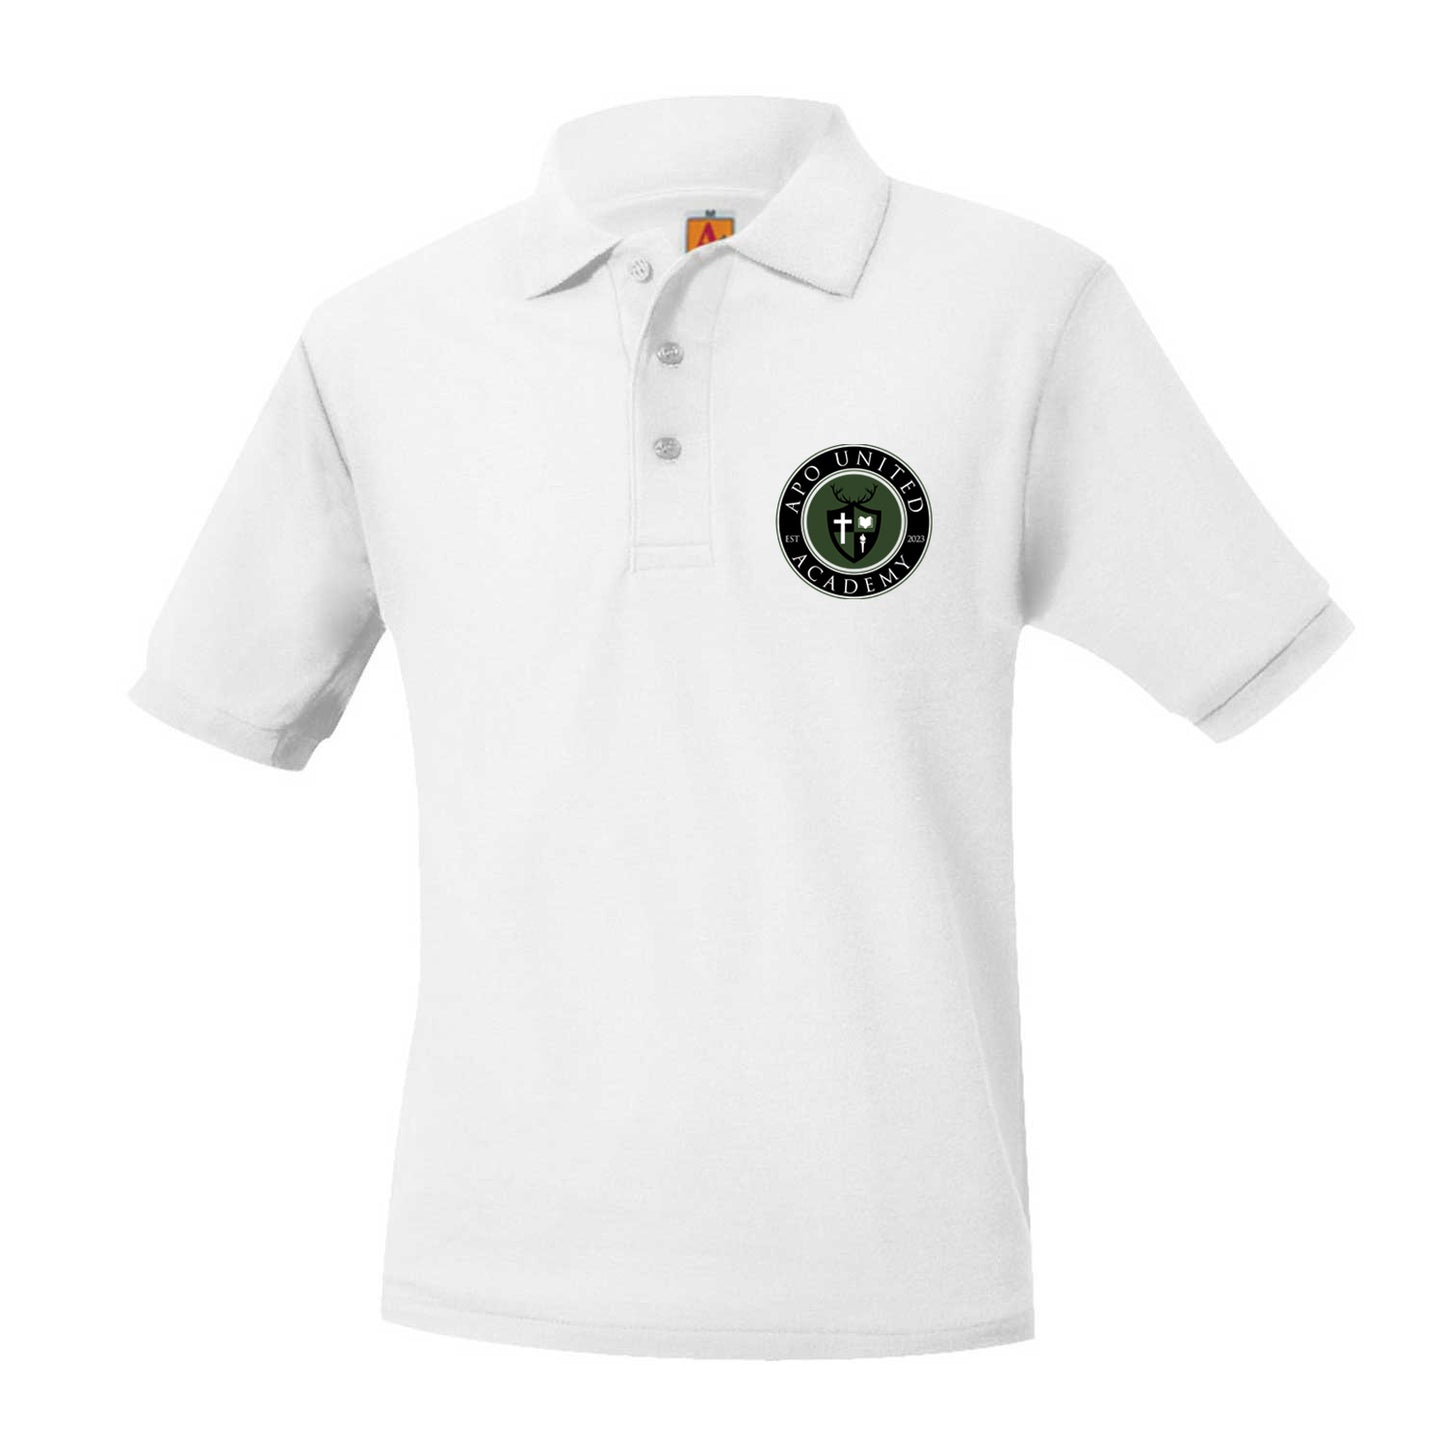 Adult Short Sleeve Pique Polo With APO Logo